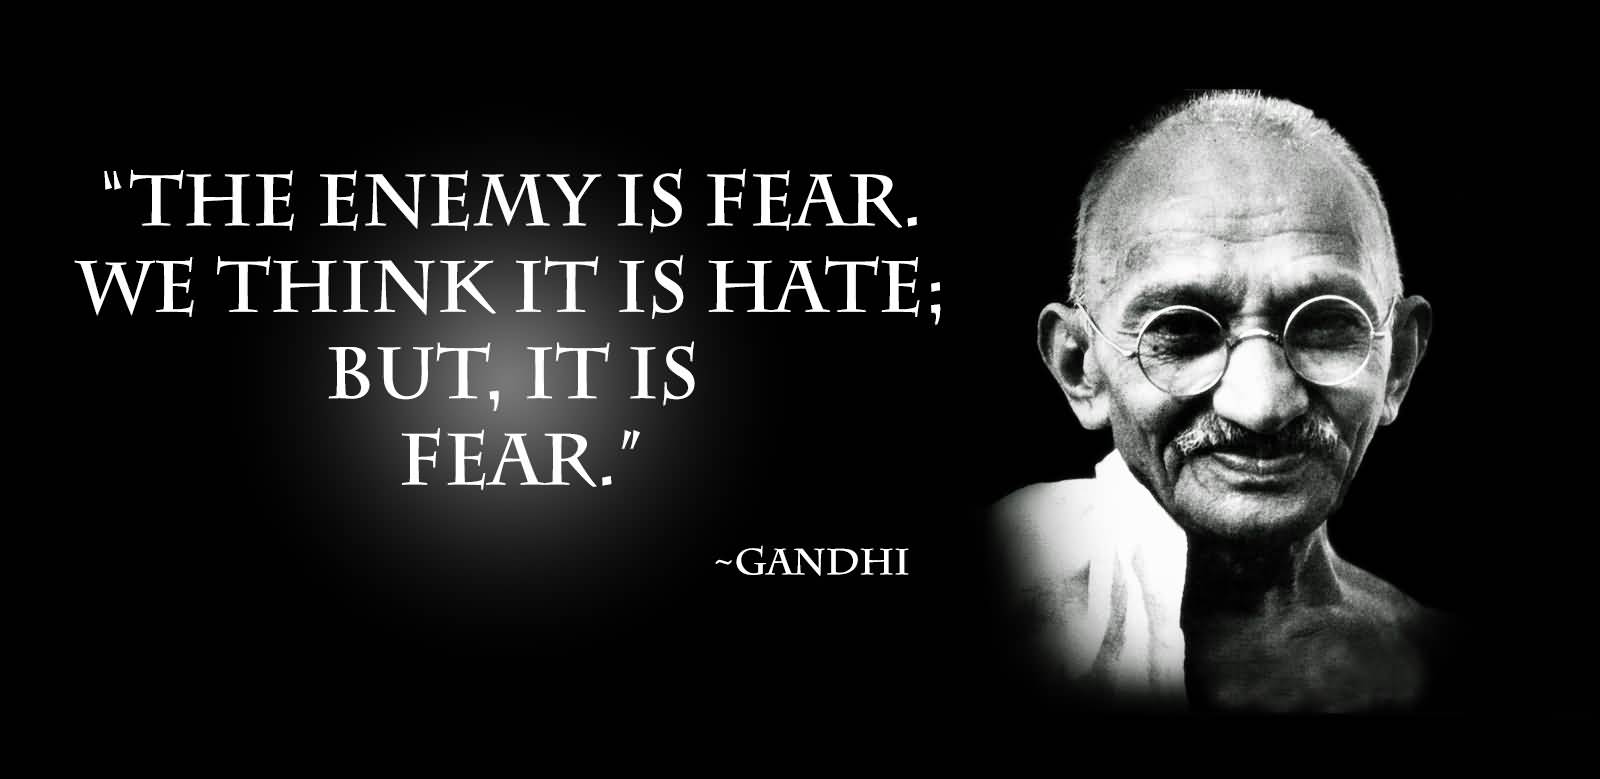 The Enemy is Fear We think it is hate but it is fear